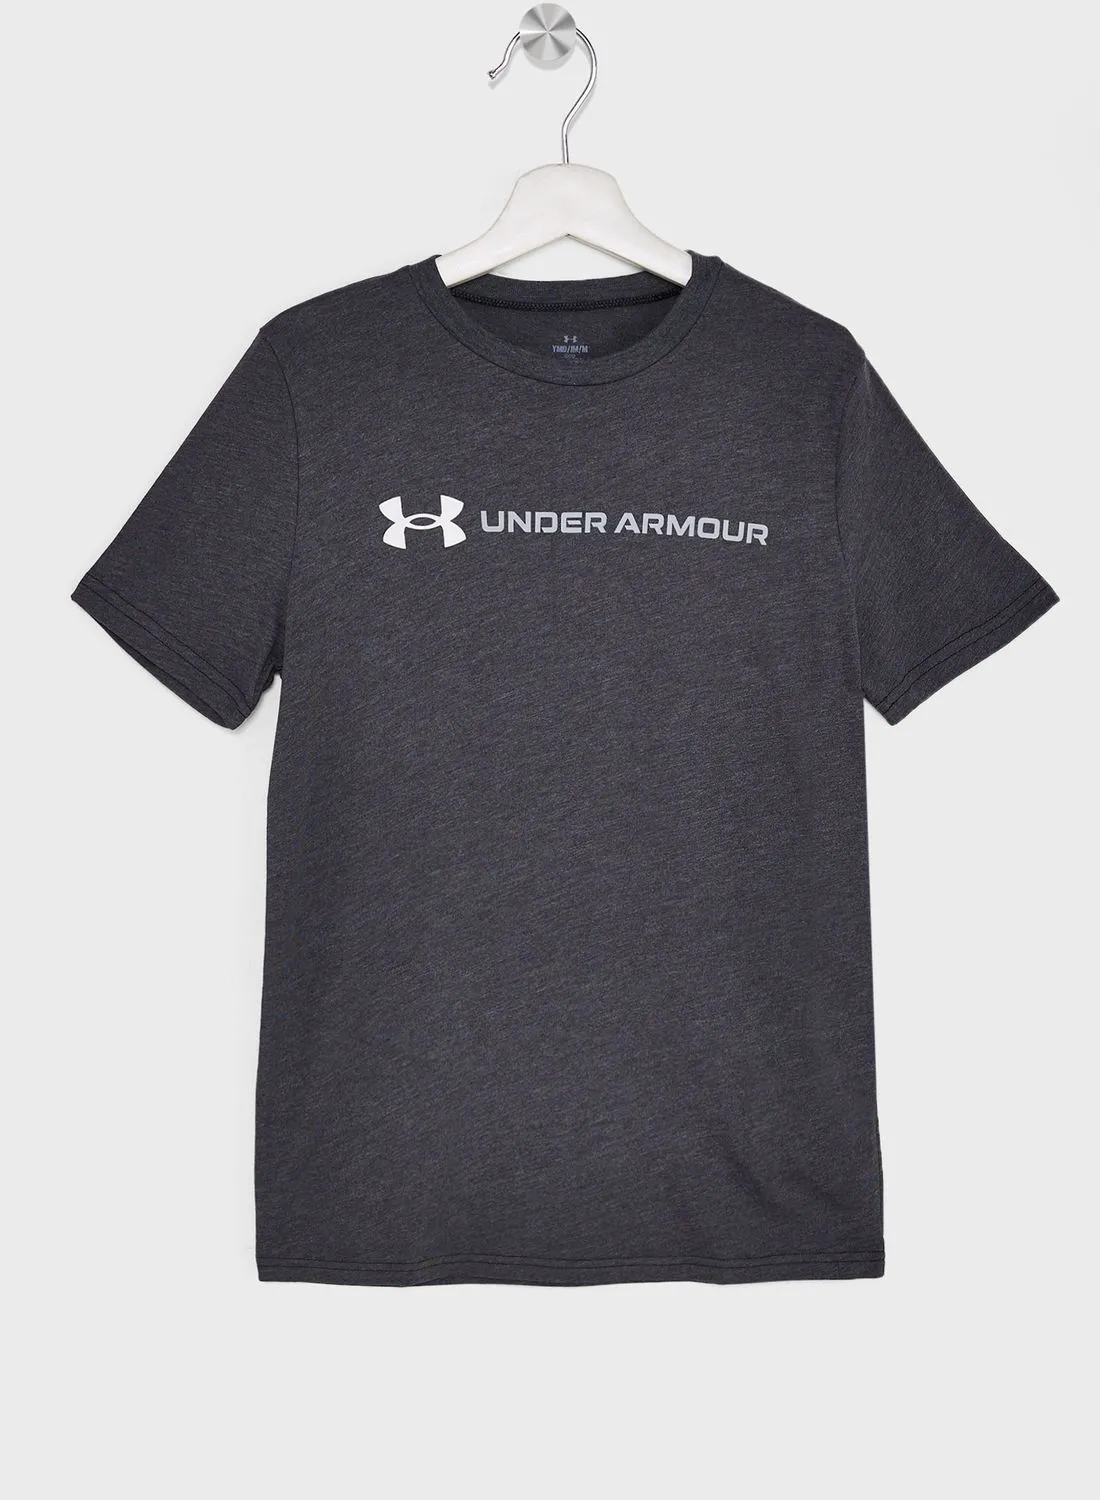 UNDER ARMOUR Boys' Wordmark Logo Short Sleeve T-shirt